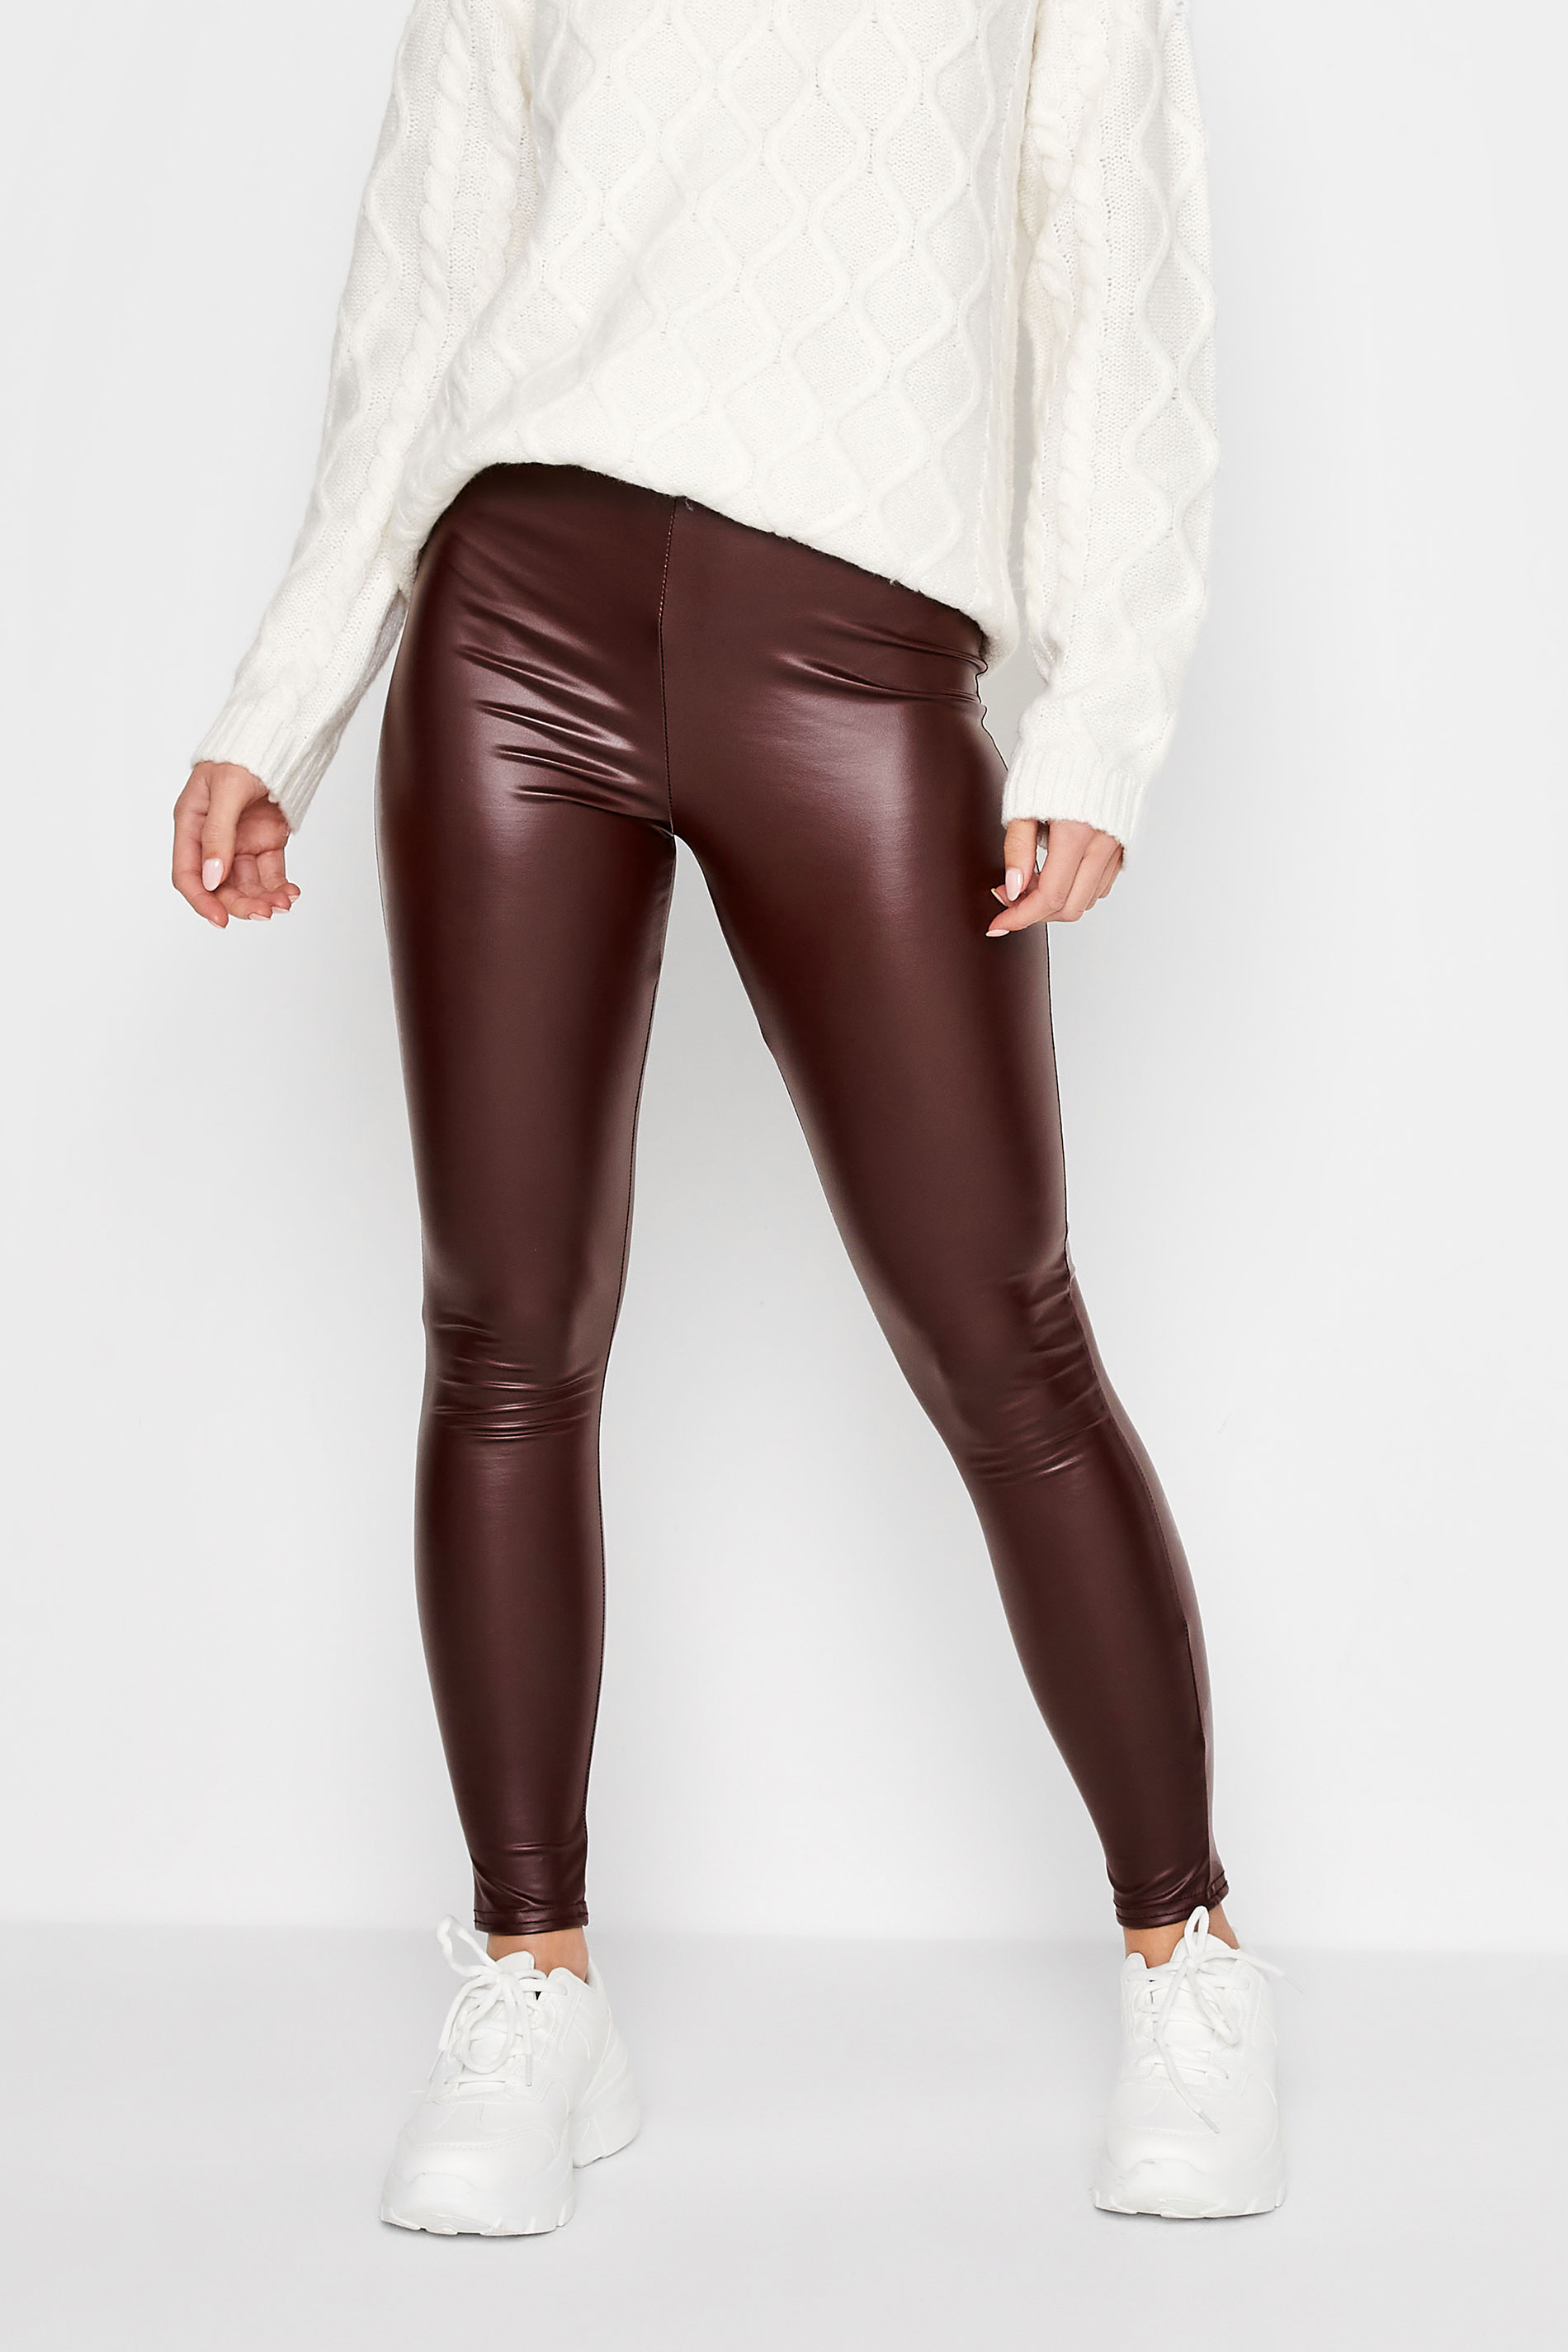 Petite Womens Burgundy Red Stretch Leather Leggings | PixieGirl 1